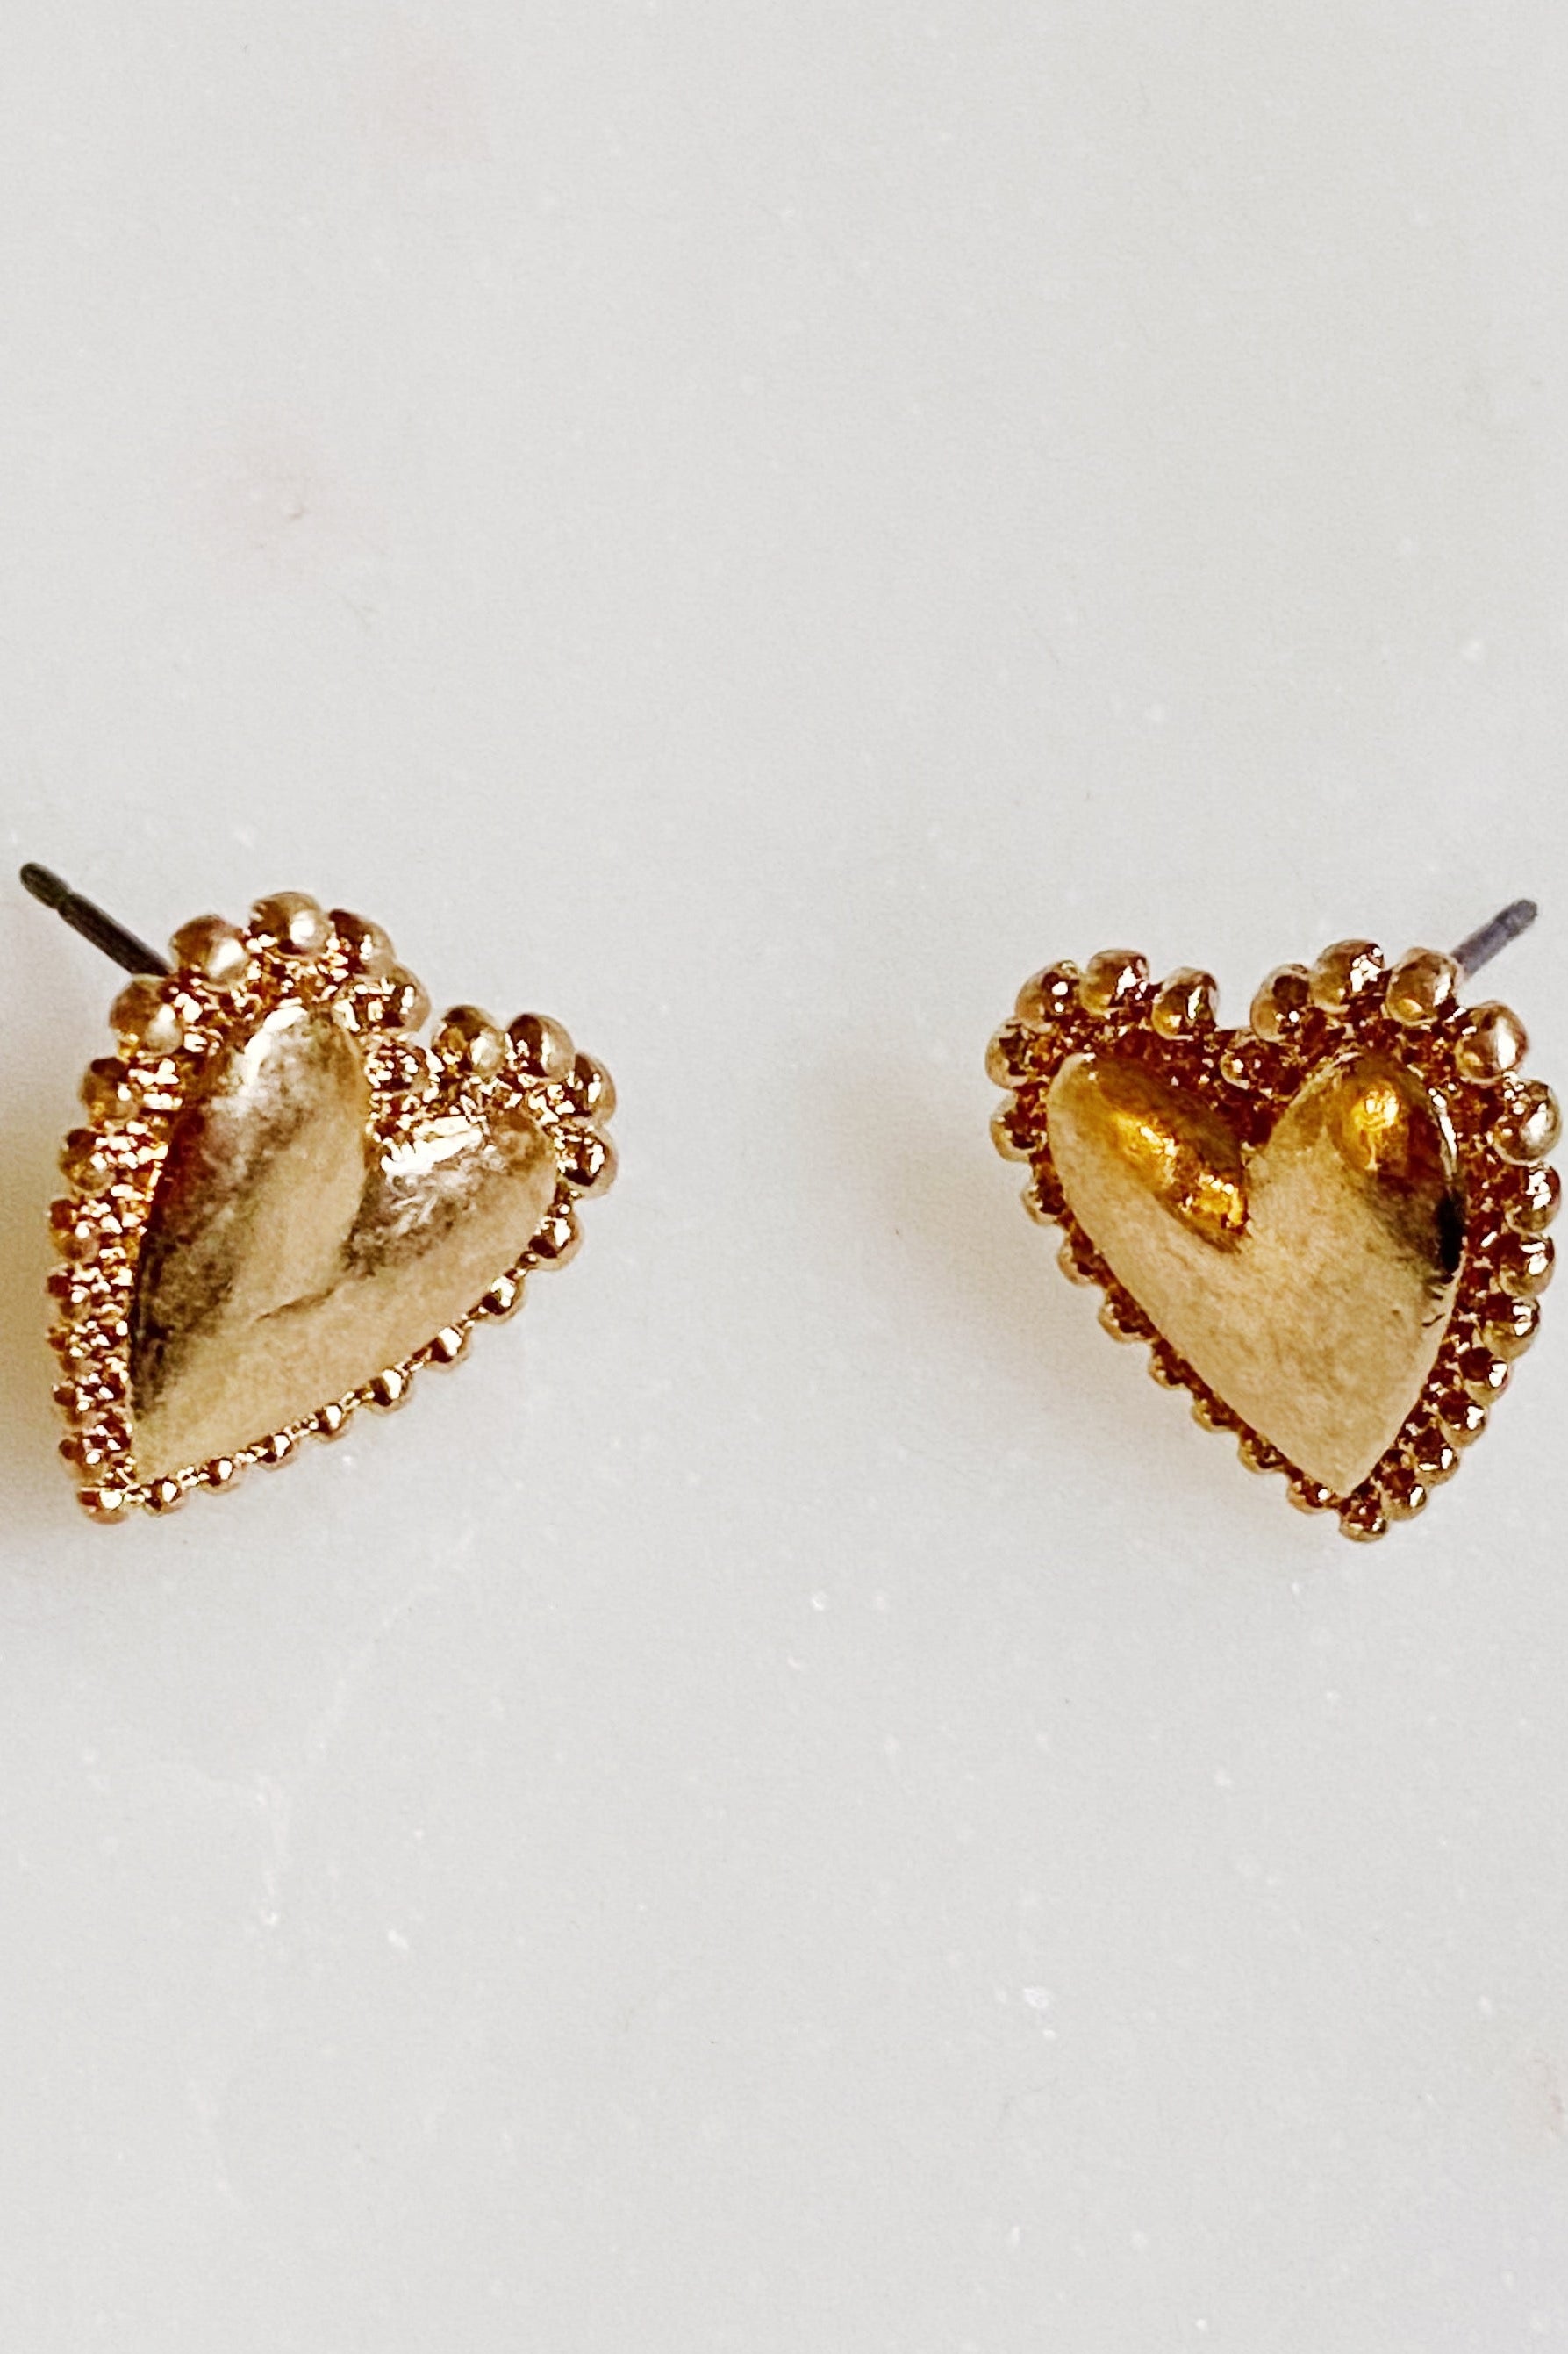 Perfect Heart Earrings Set Of 3 Ellisonyoung.com